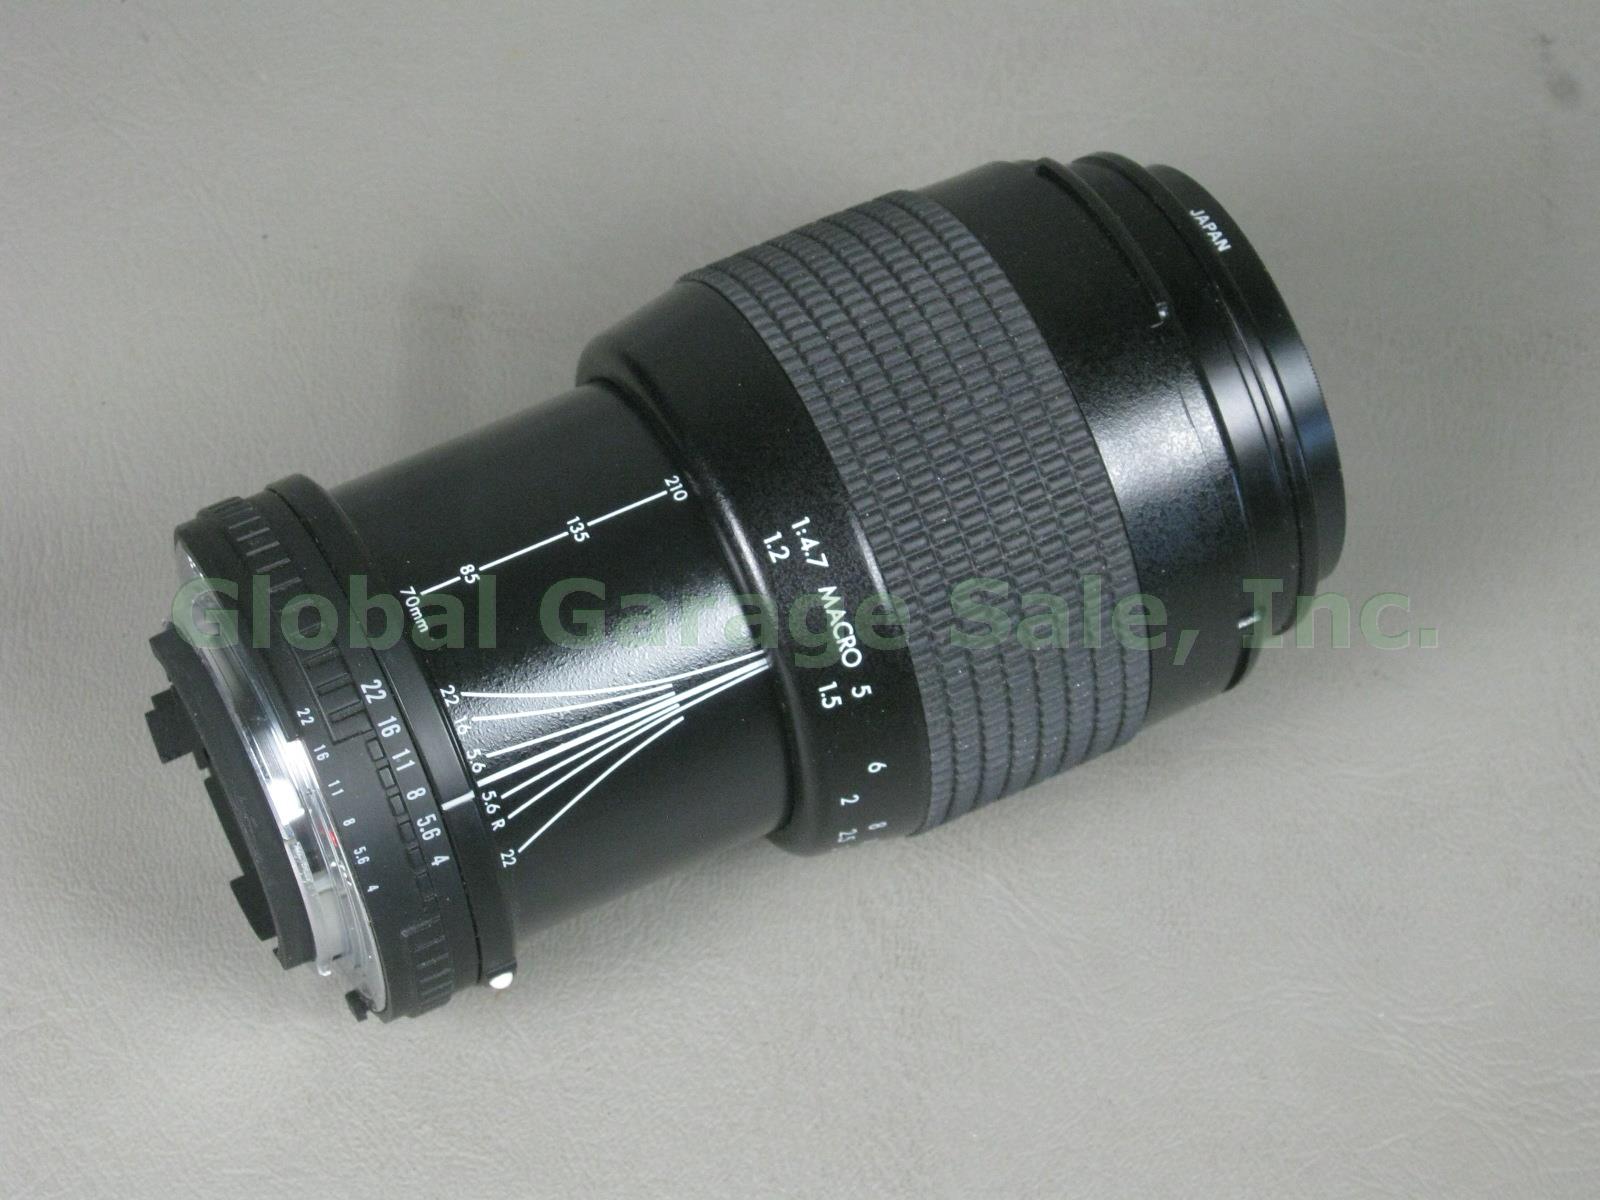 Nikkormat EL + Nikkor-Q 200mm 1:4 Zoom Lens Nikon FB5 Case Kiron 35-135mm Macro 17